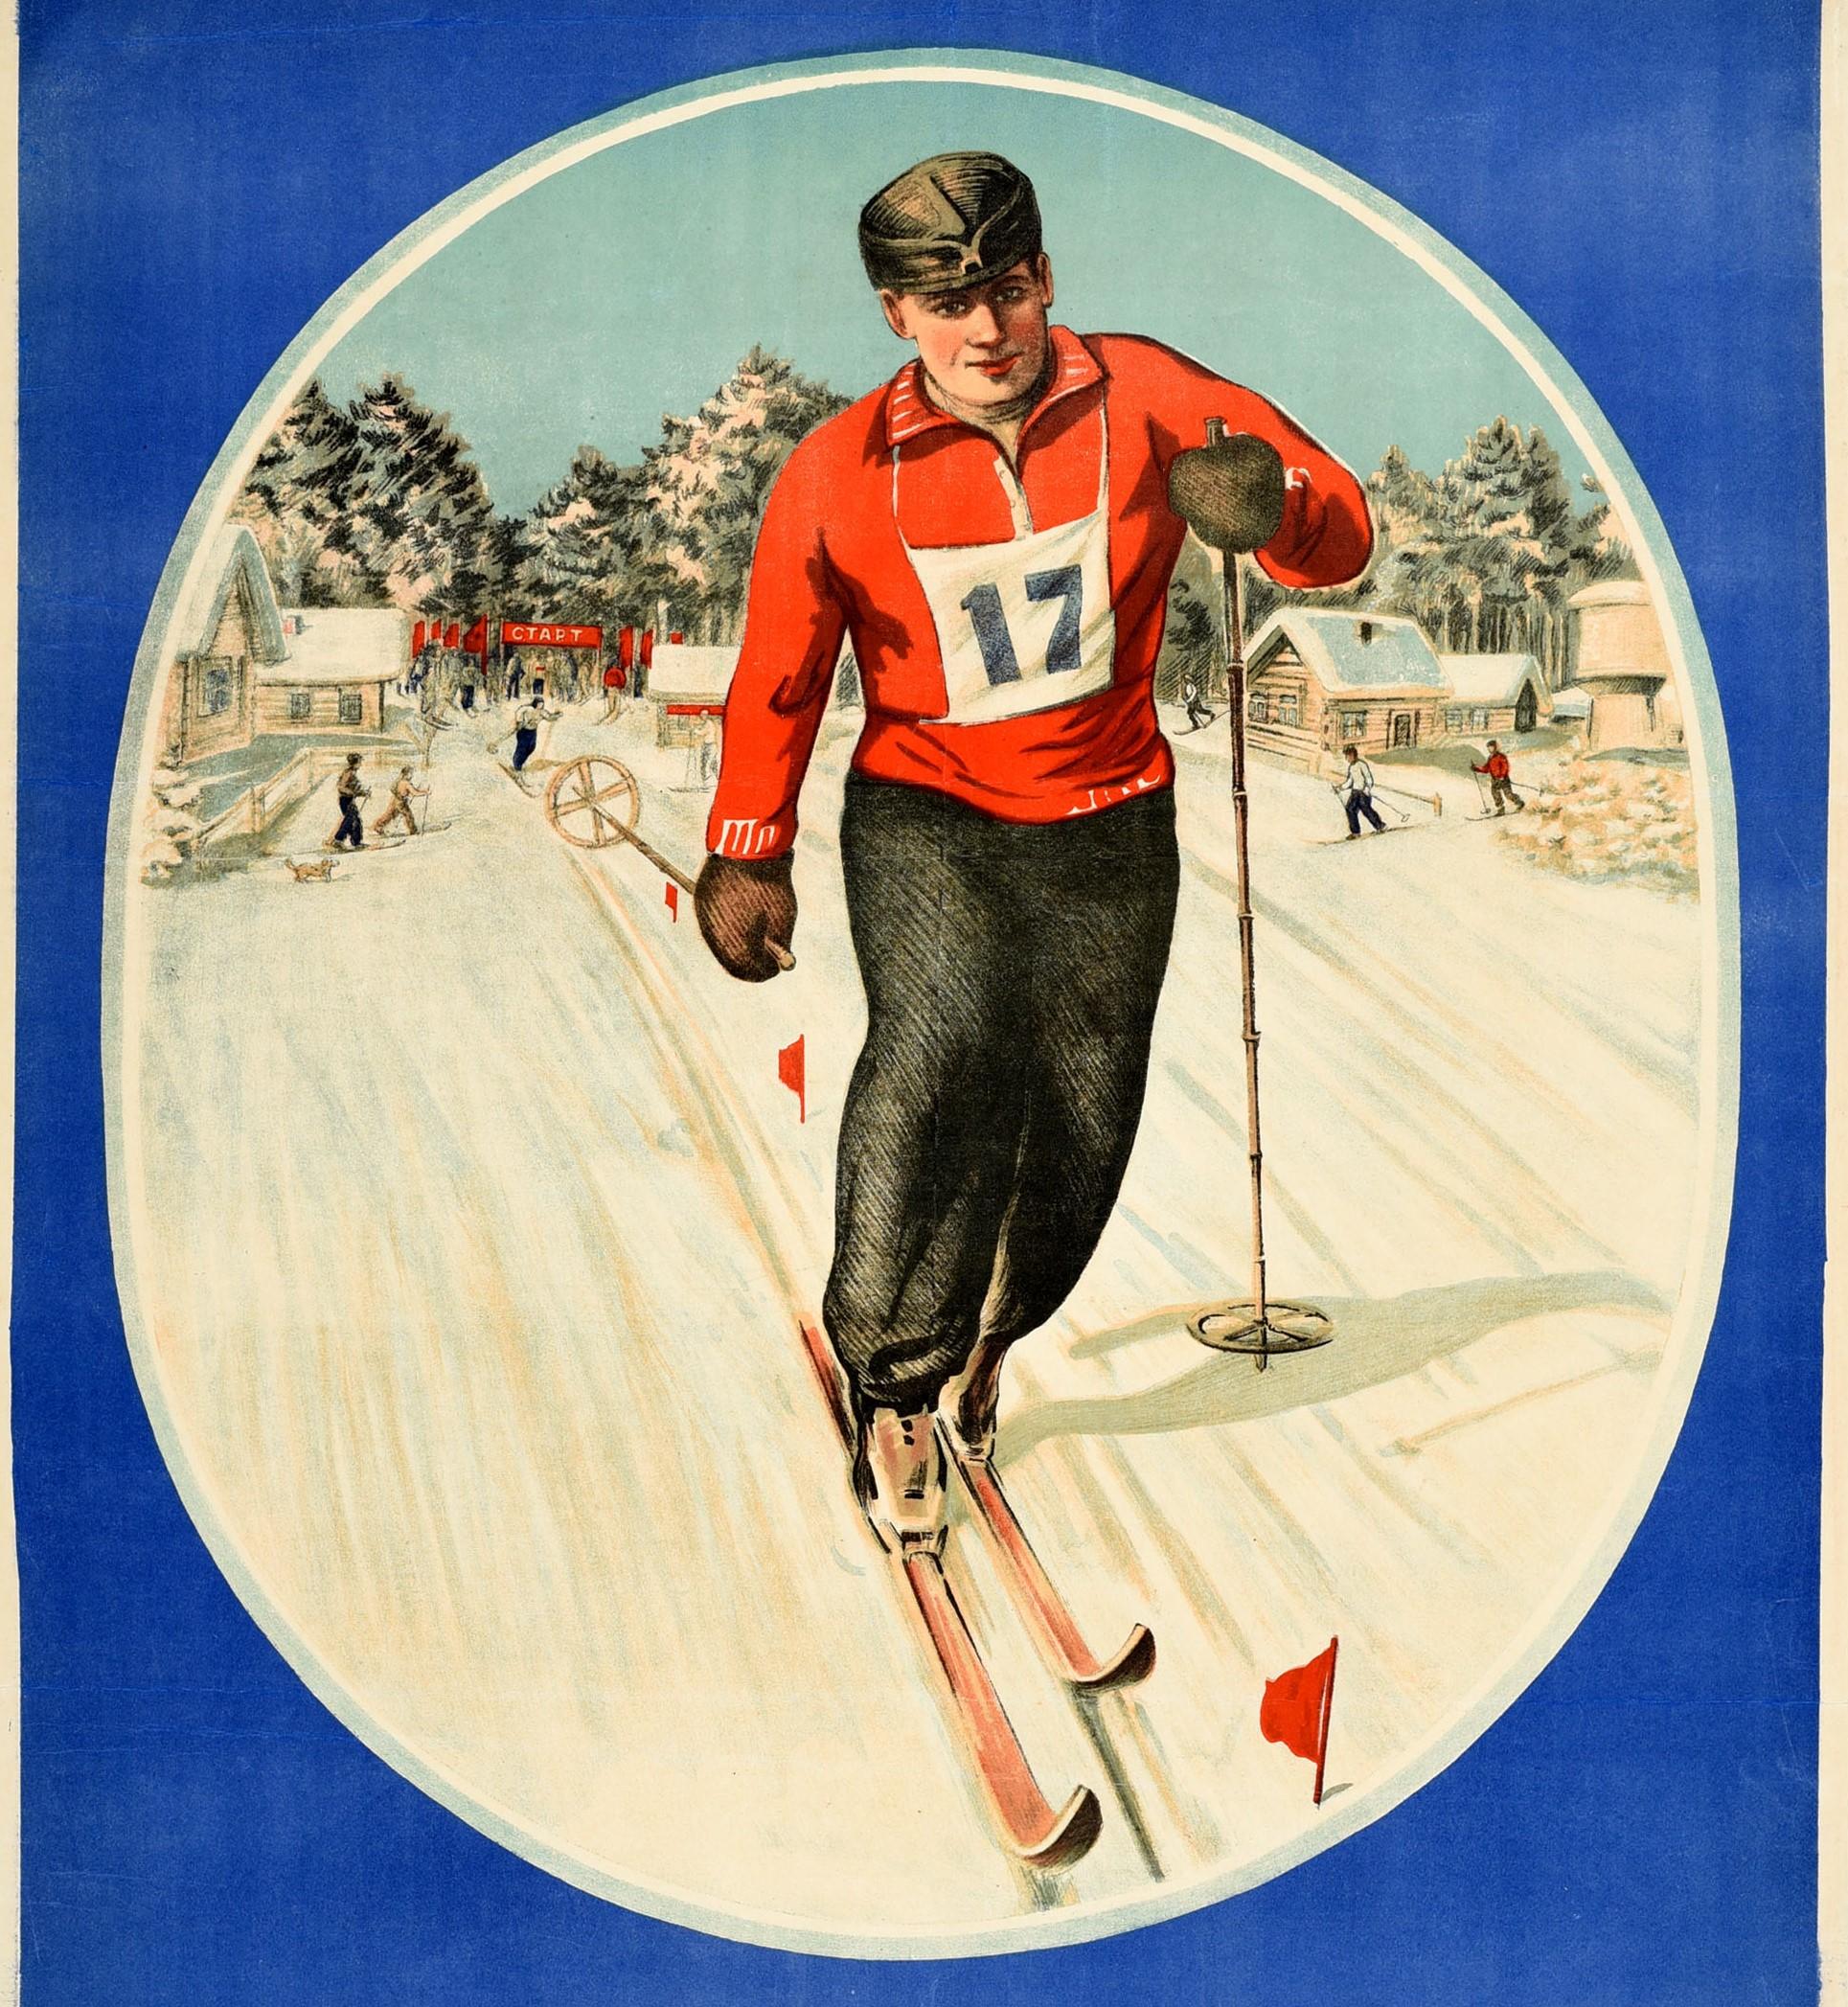 Russian Original Vintage Soviet Winter Sport Poster Rural Youth On Skis! Ft Skiing Scene